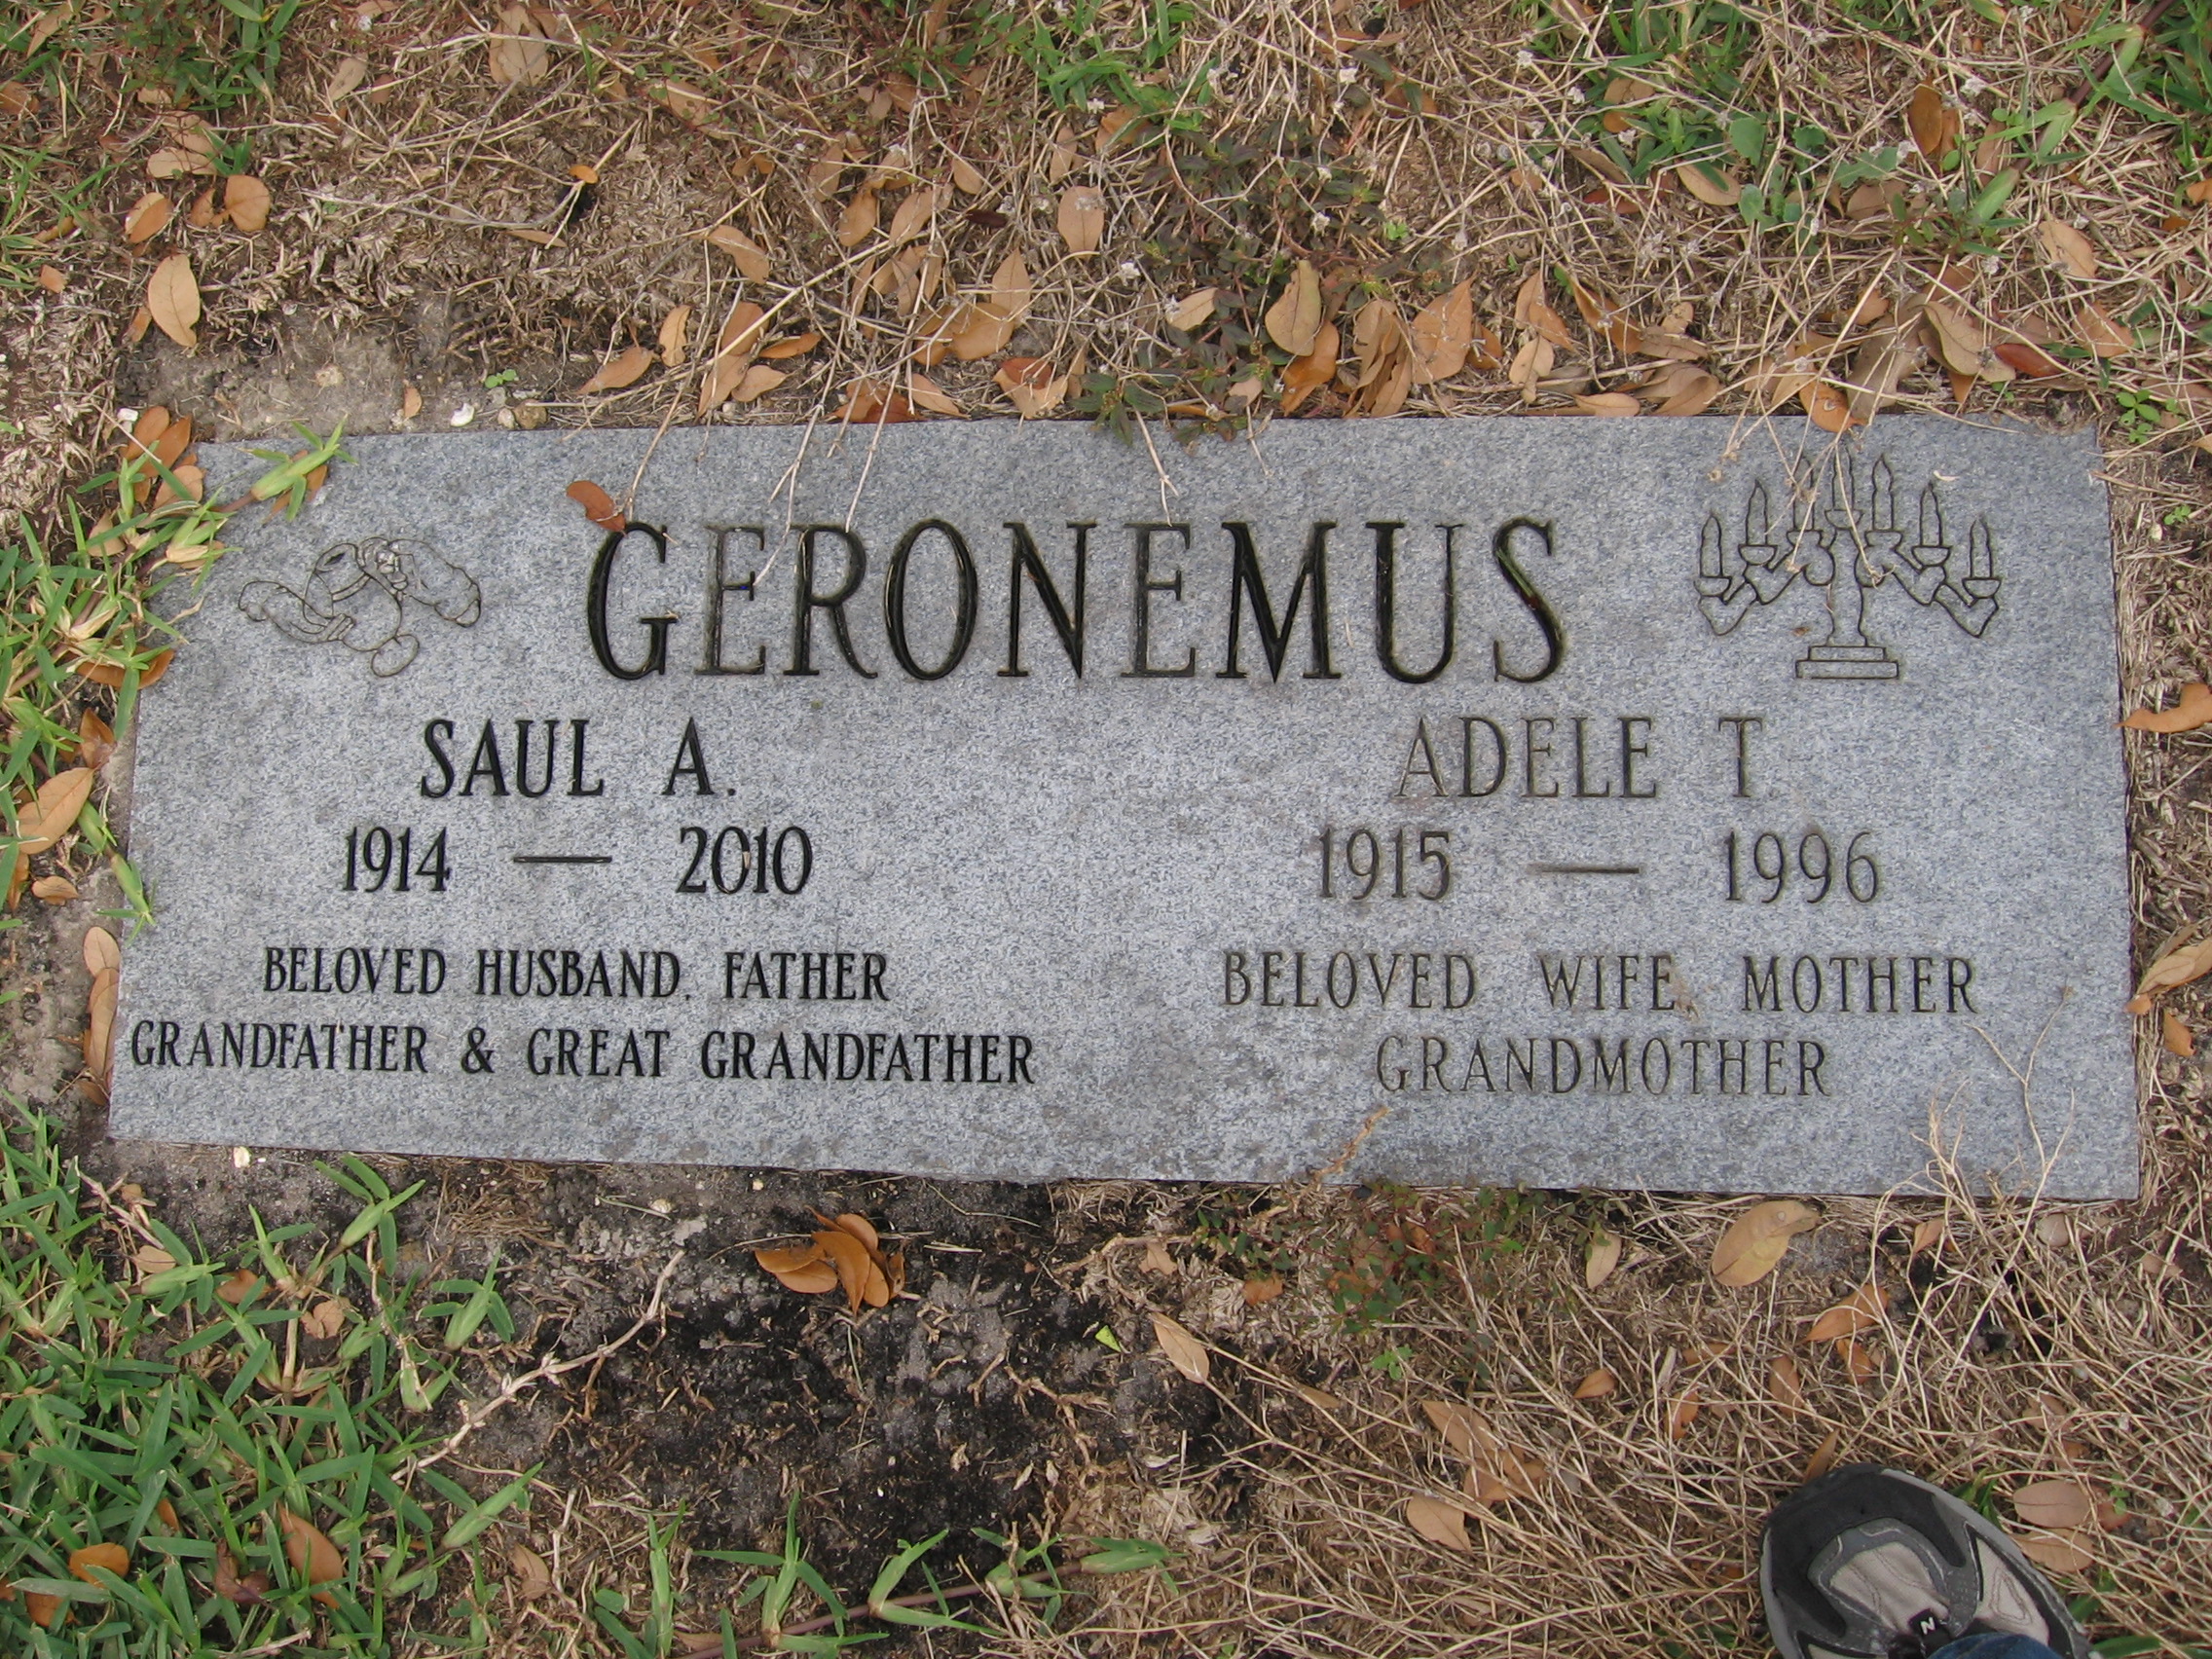 Saul A Geronemus